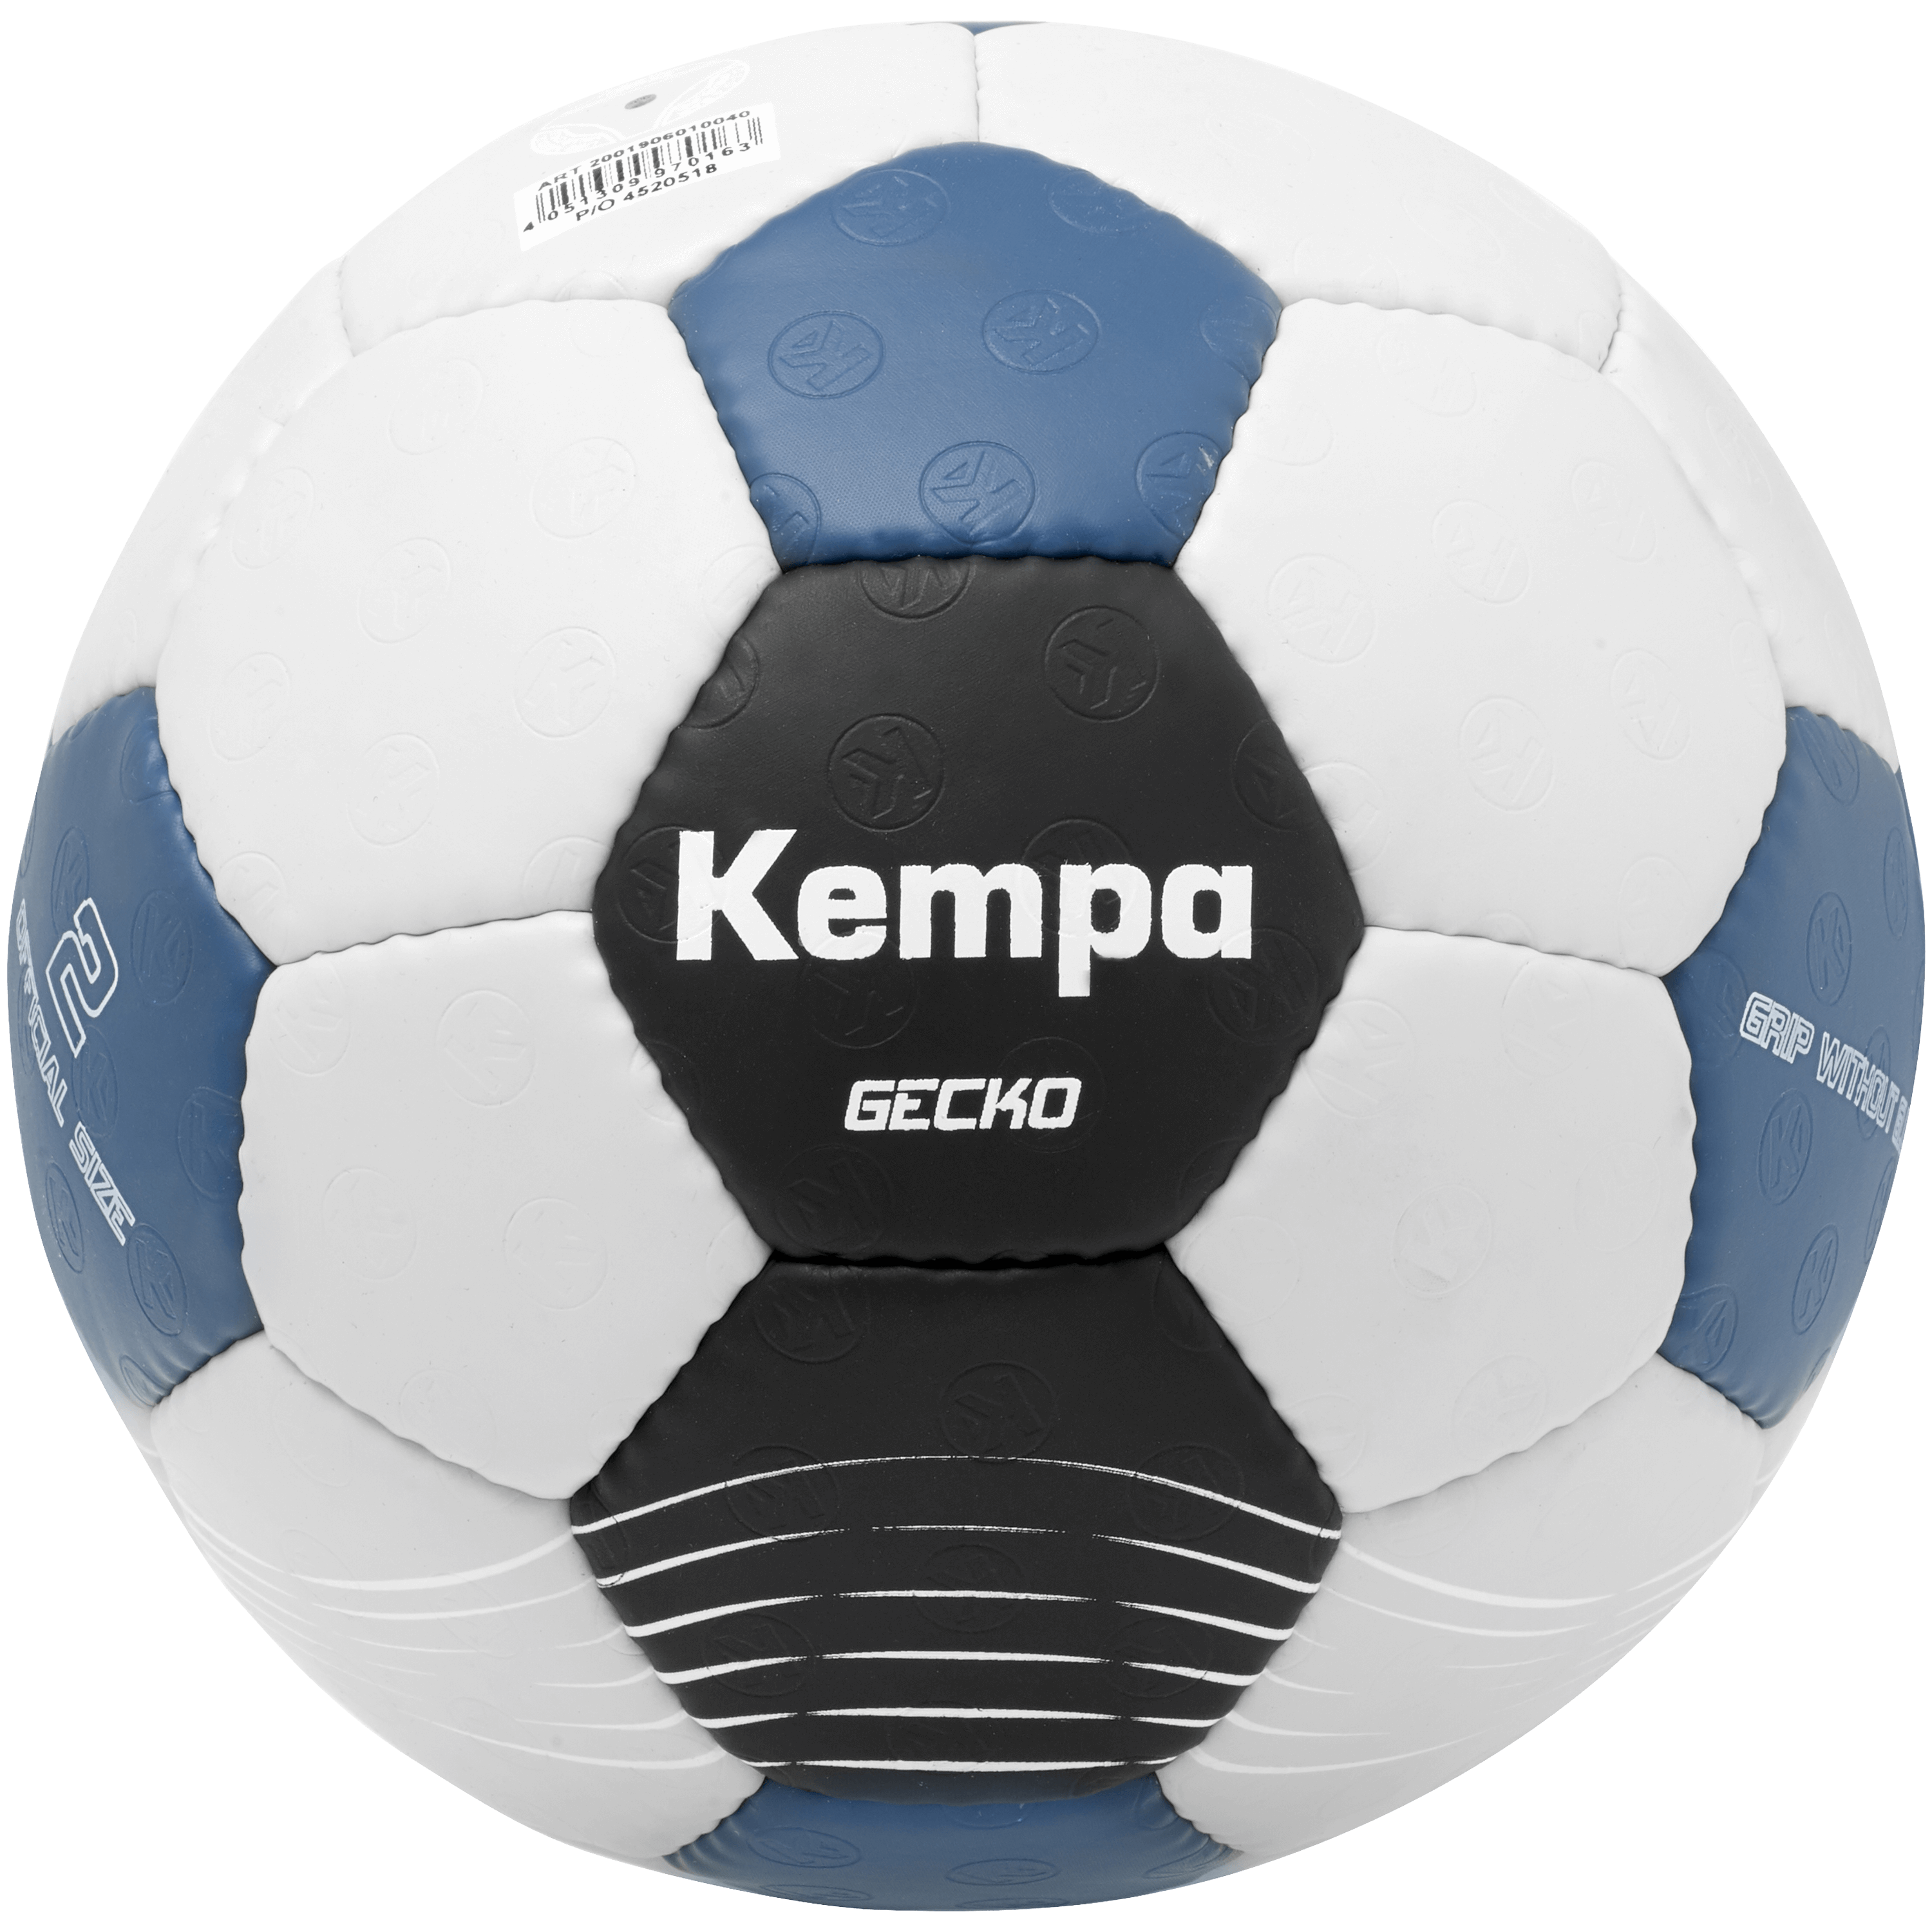 Kempa Handball Gecko